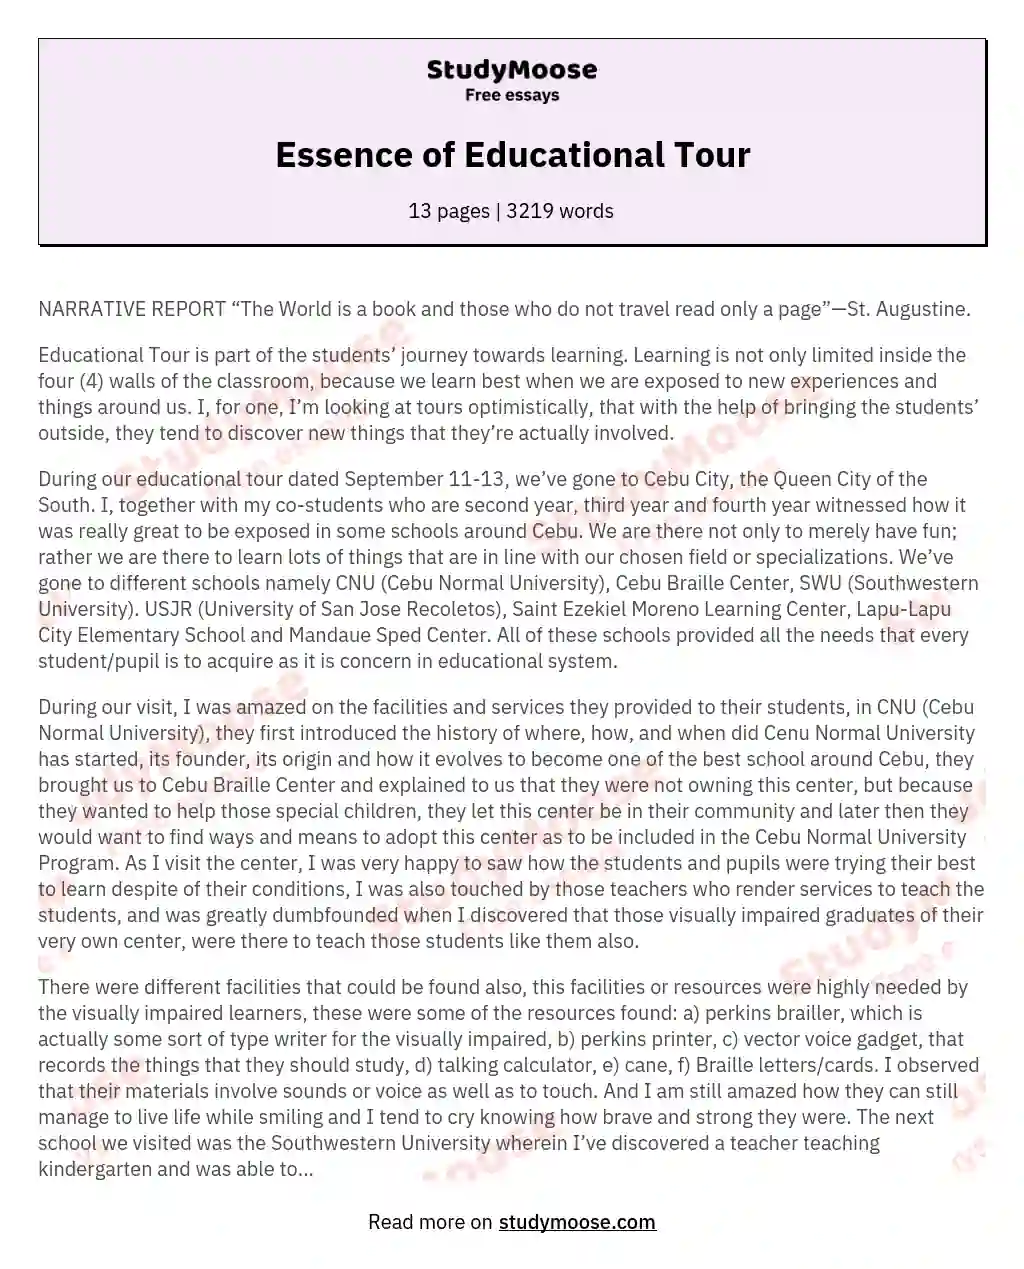 Essence of Educational Tour essay